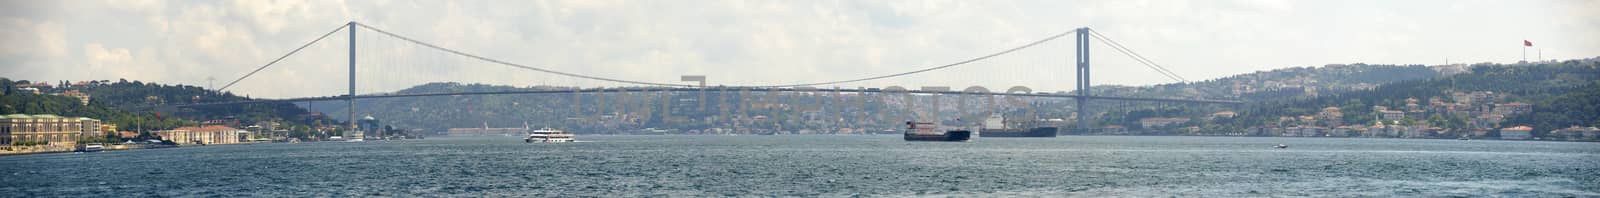 Panoramic view of Ataturk suspension bridge spanning the Bosphorus river in Istanbul, Turkey against a blue sky